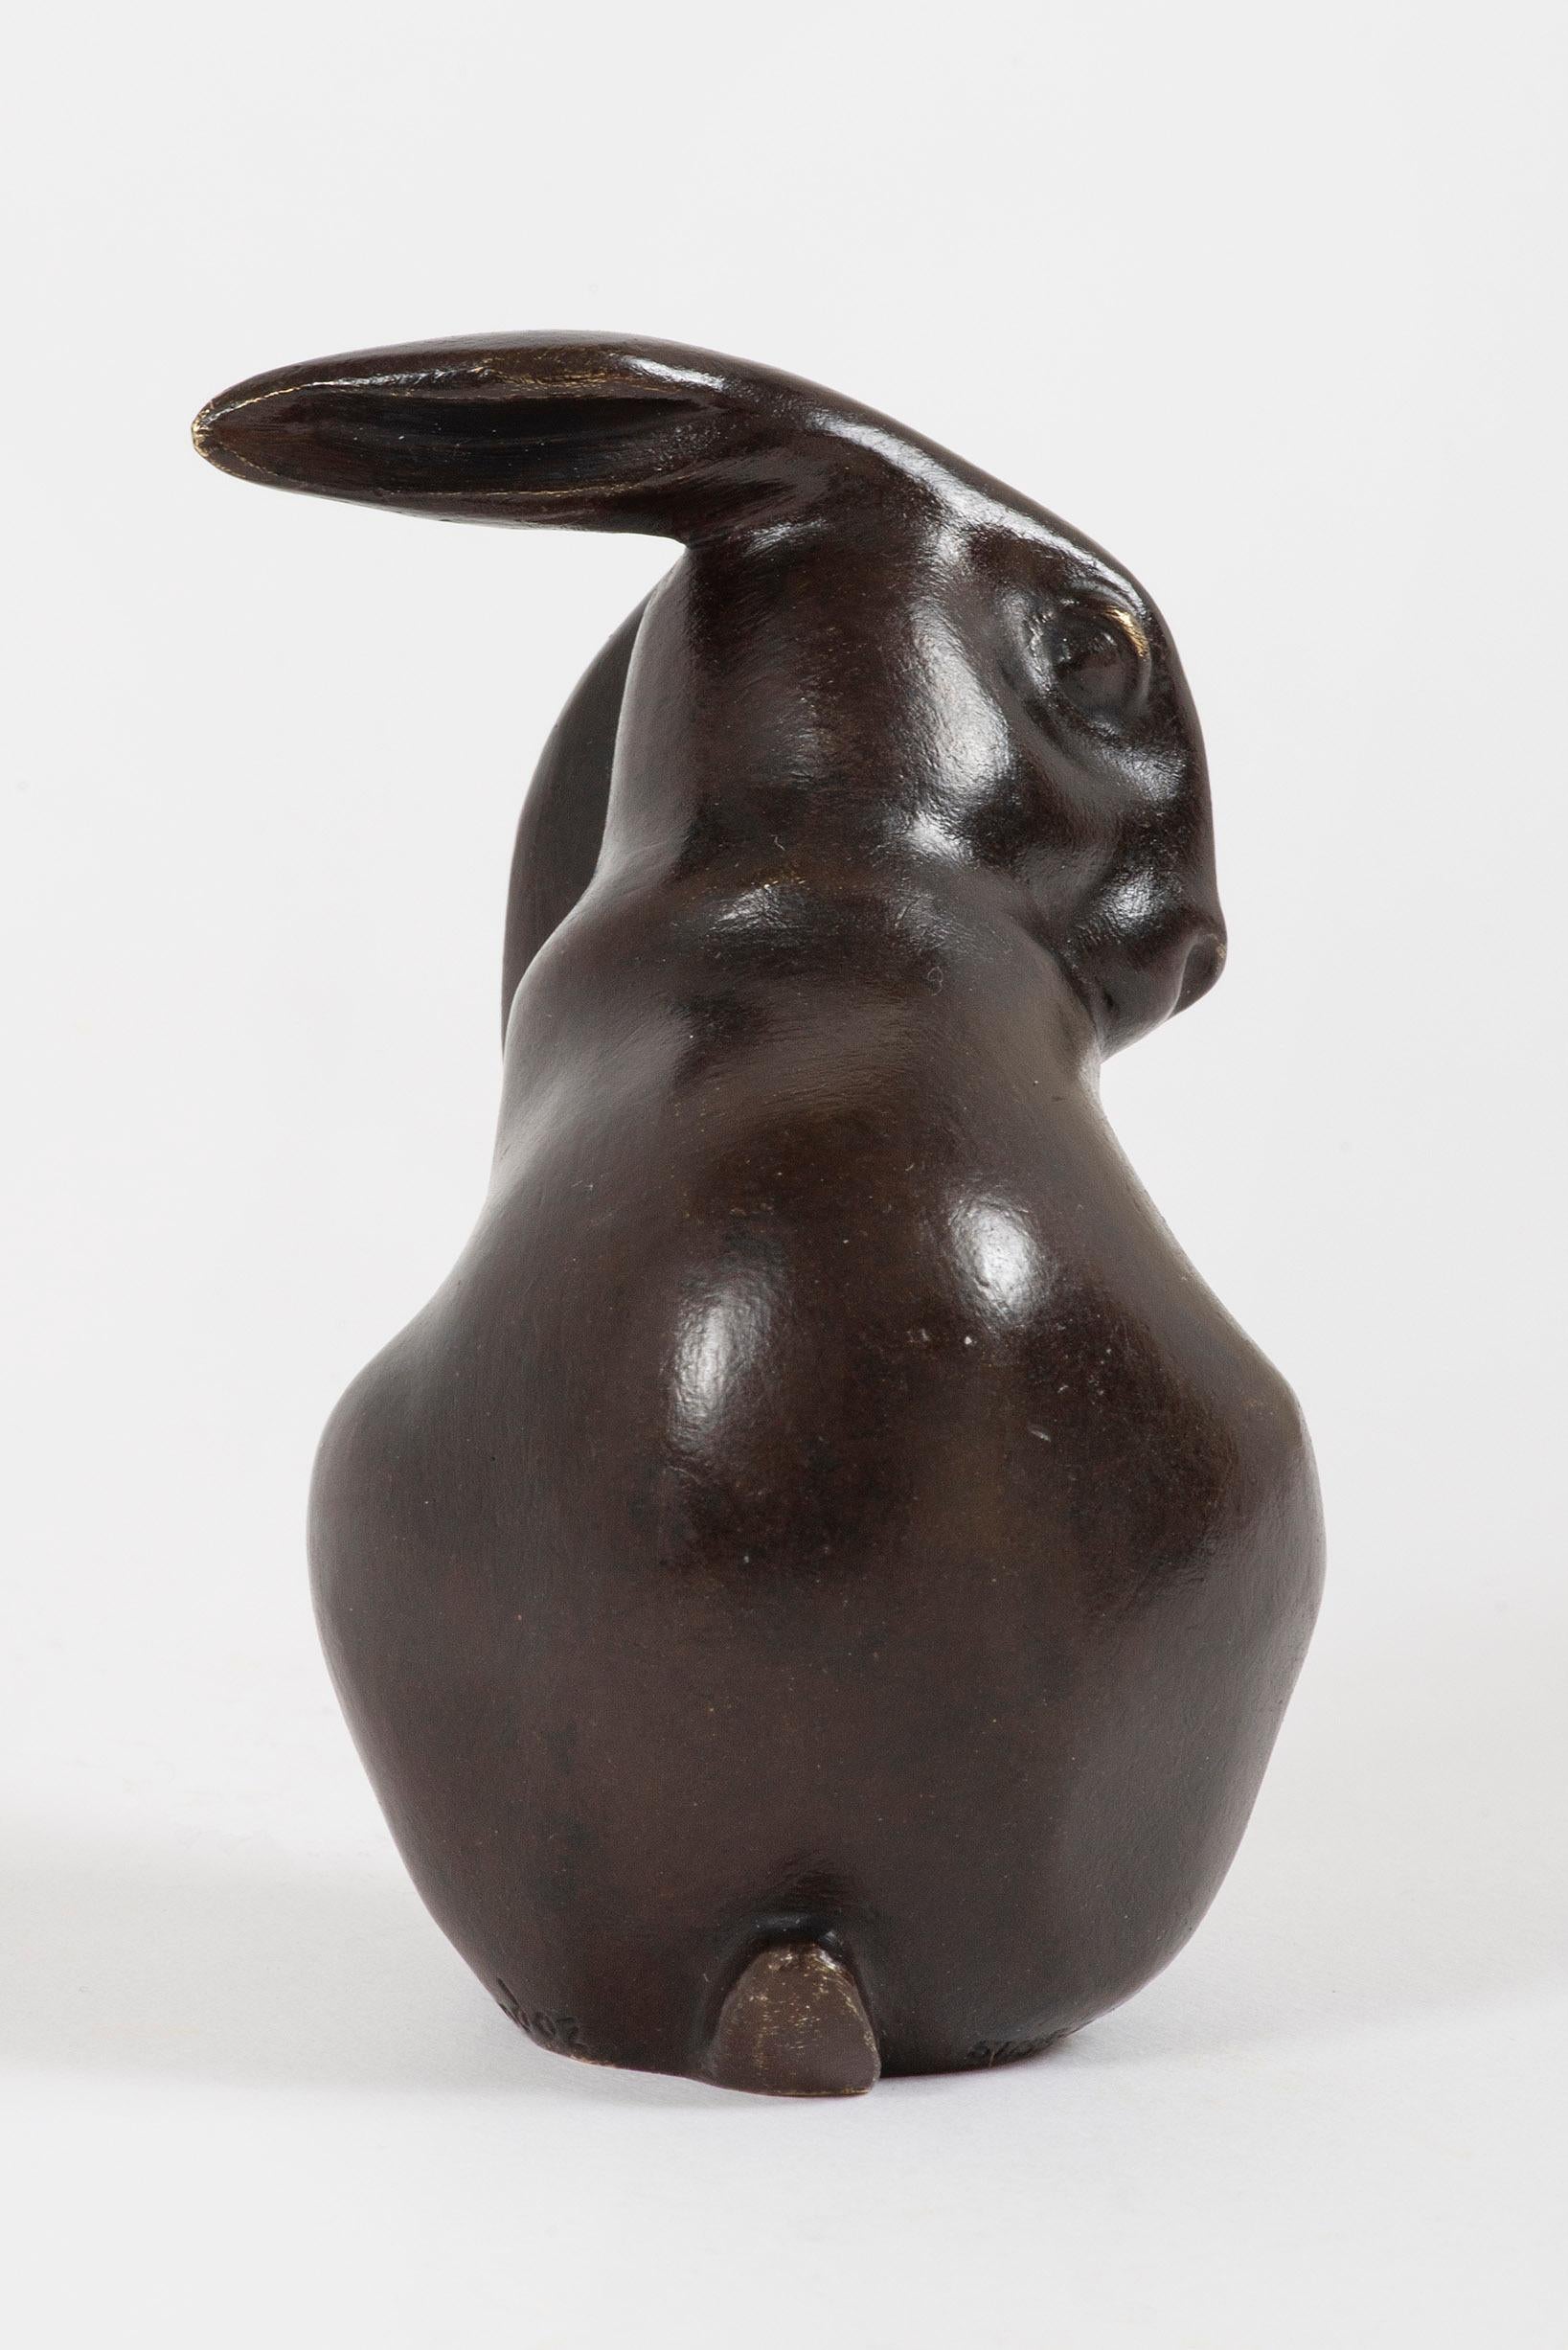 Lapin assis, sitted rabbit, Sandoz, sculpture, Animal, Bronze, 20's century - Sculpture by Edouard-Marcel Sandoz